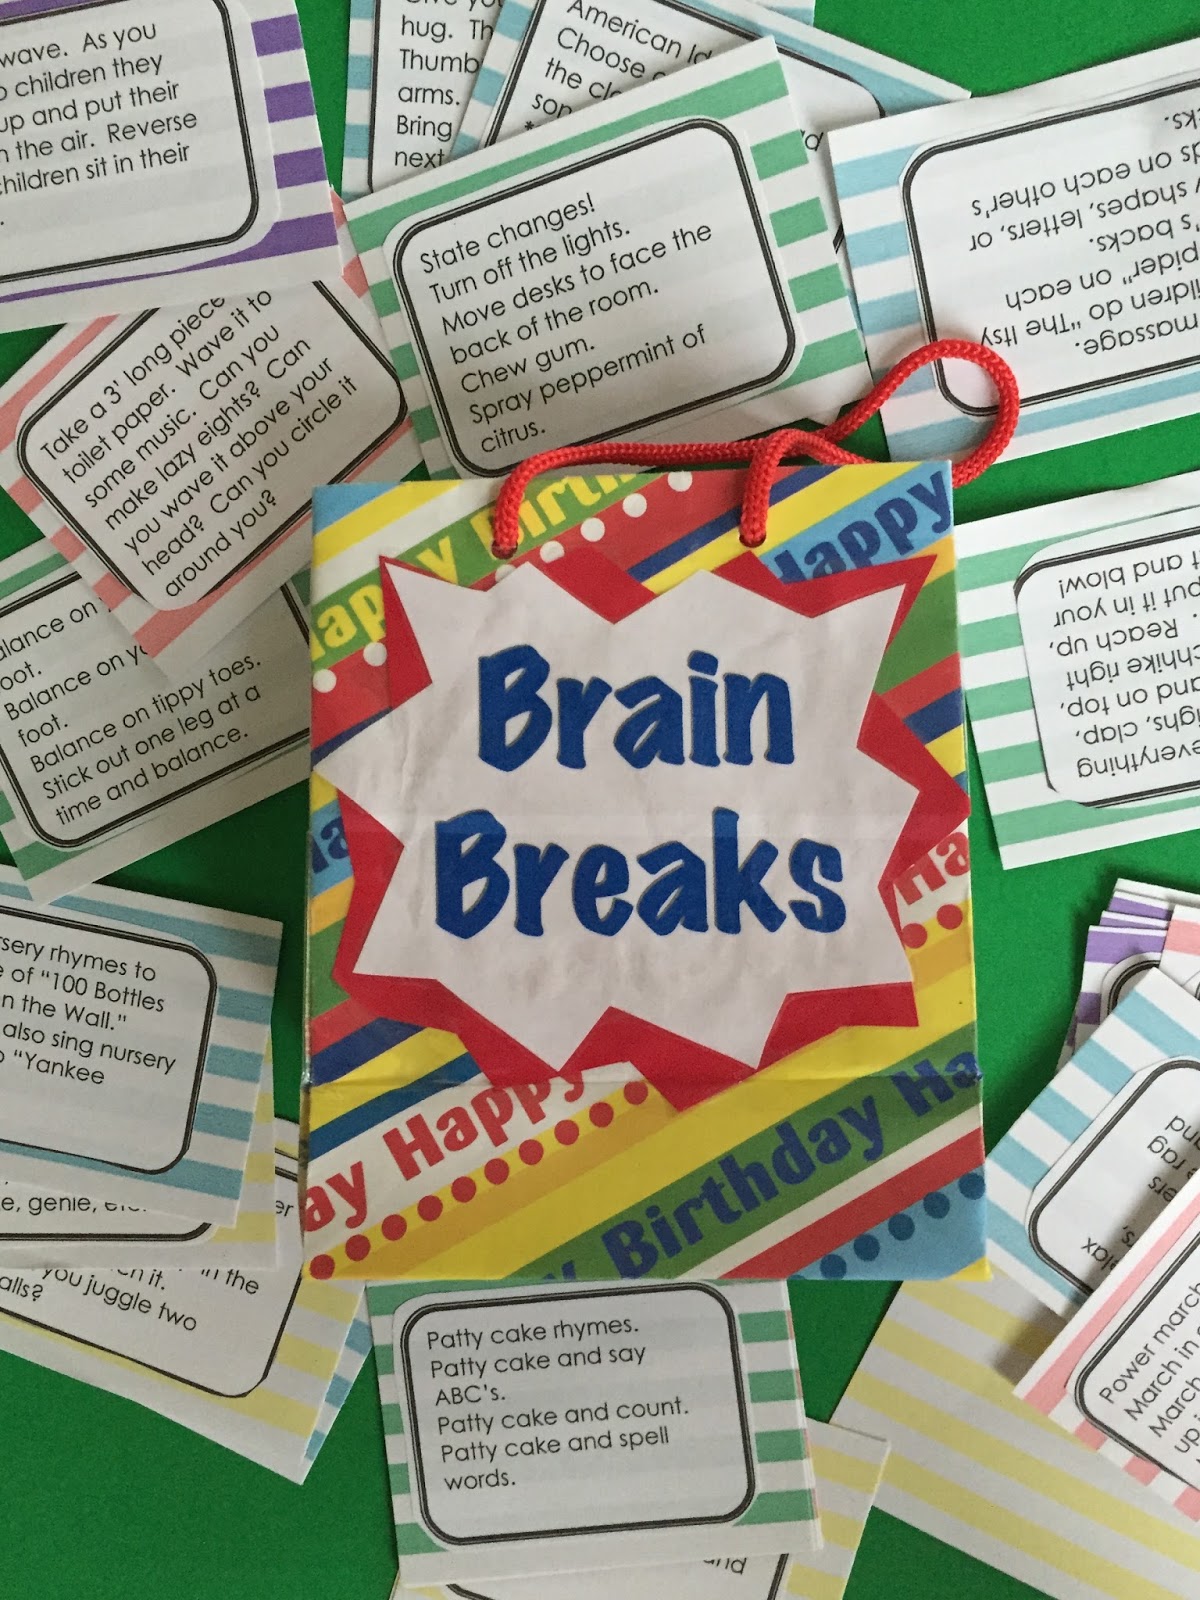 What are some good brain break activities?